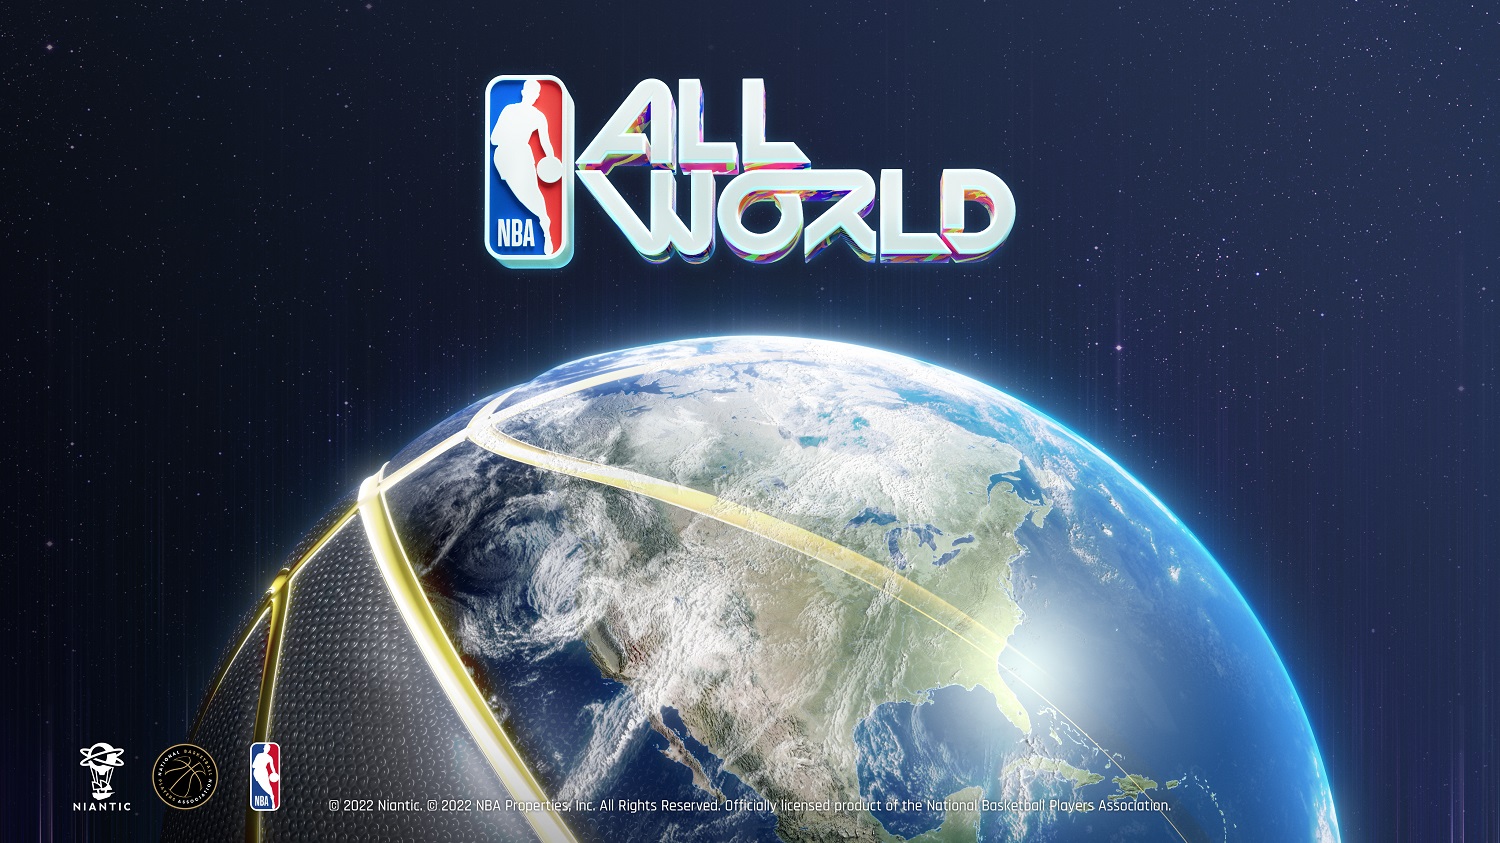 Game NBA All-World, Main Bola Basket di Dunia Metaverse